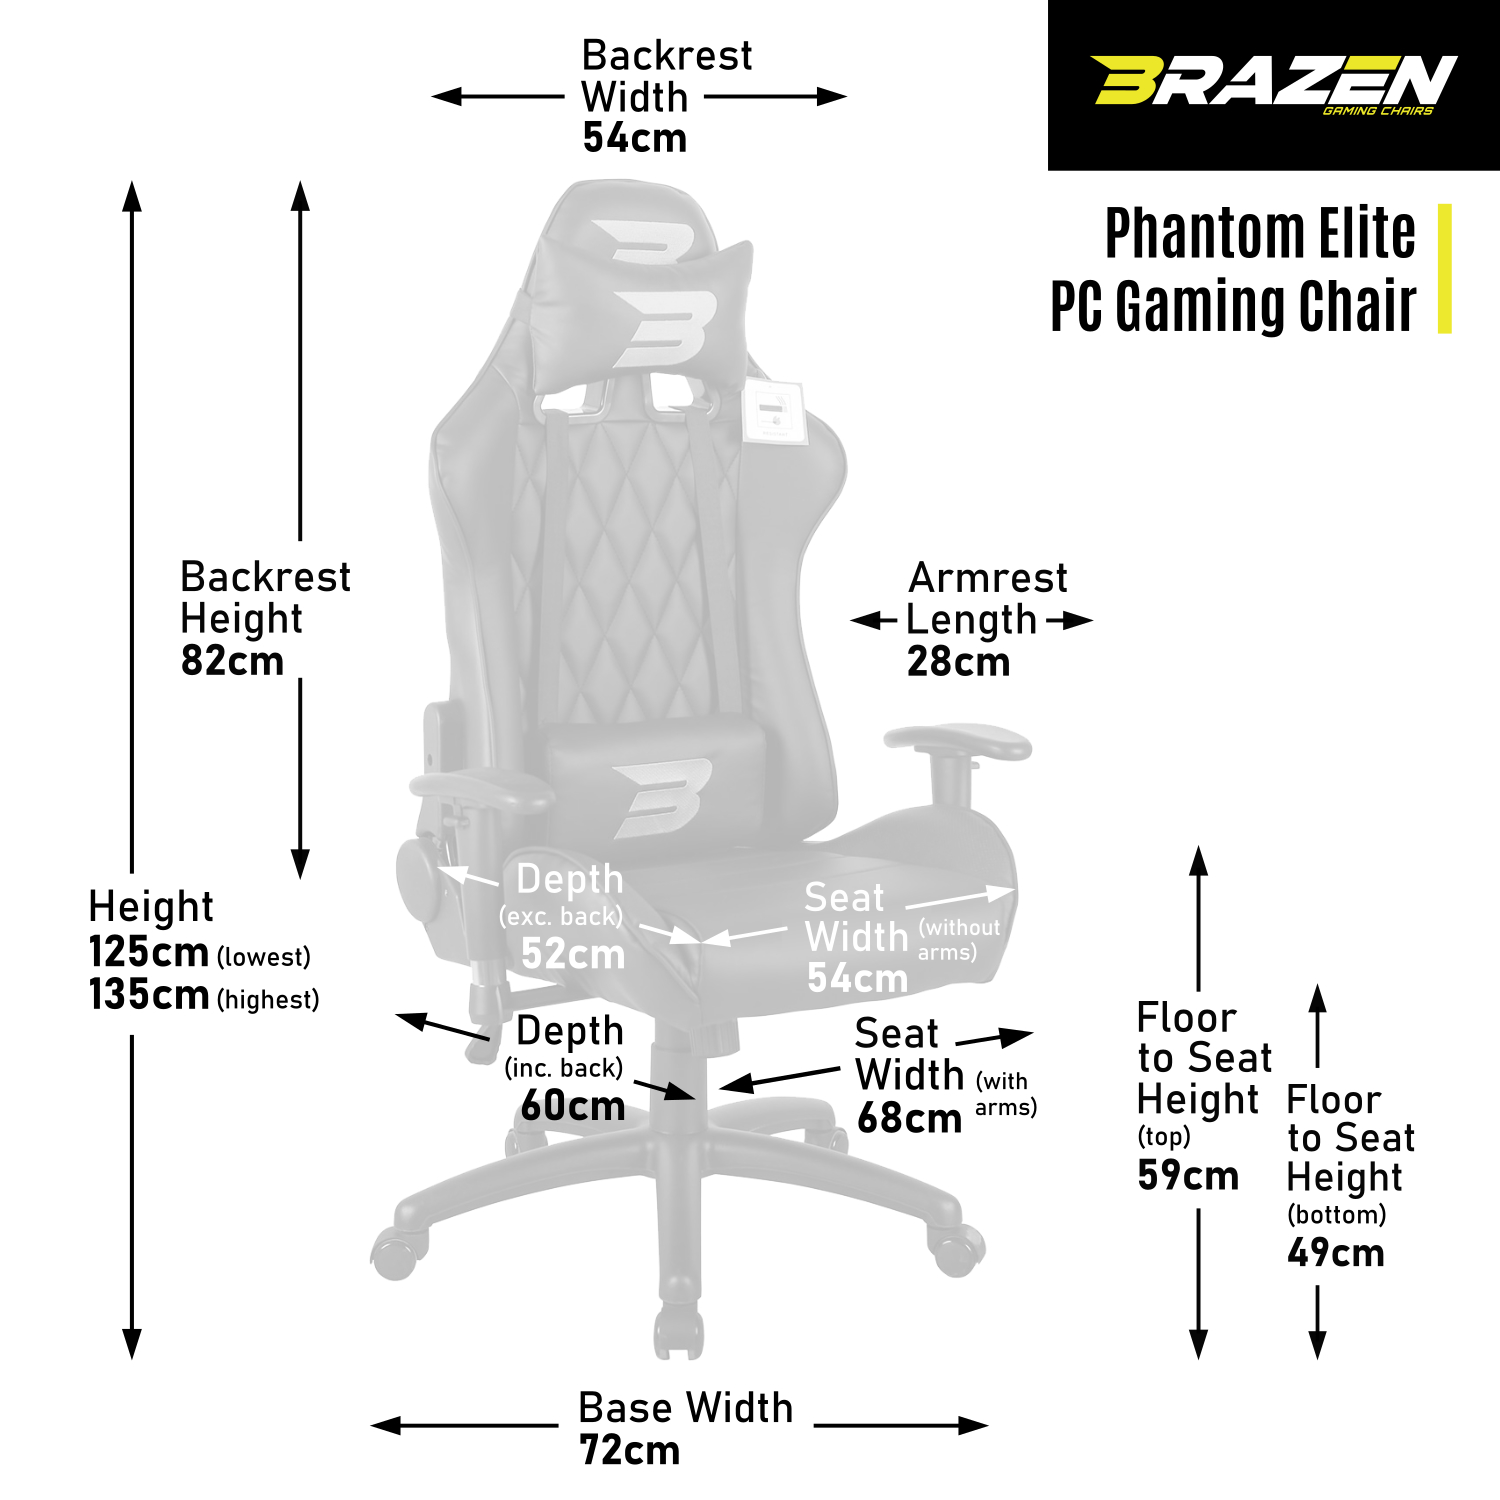 Cougar Armor Elite Gaming Chair, Black - Gaming Chairs - Memory Express Inc.